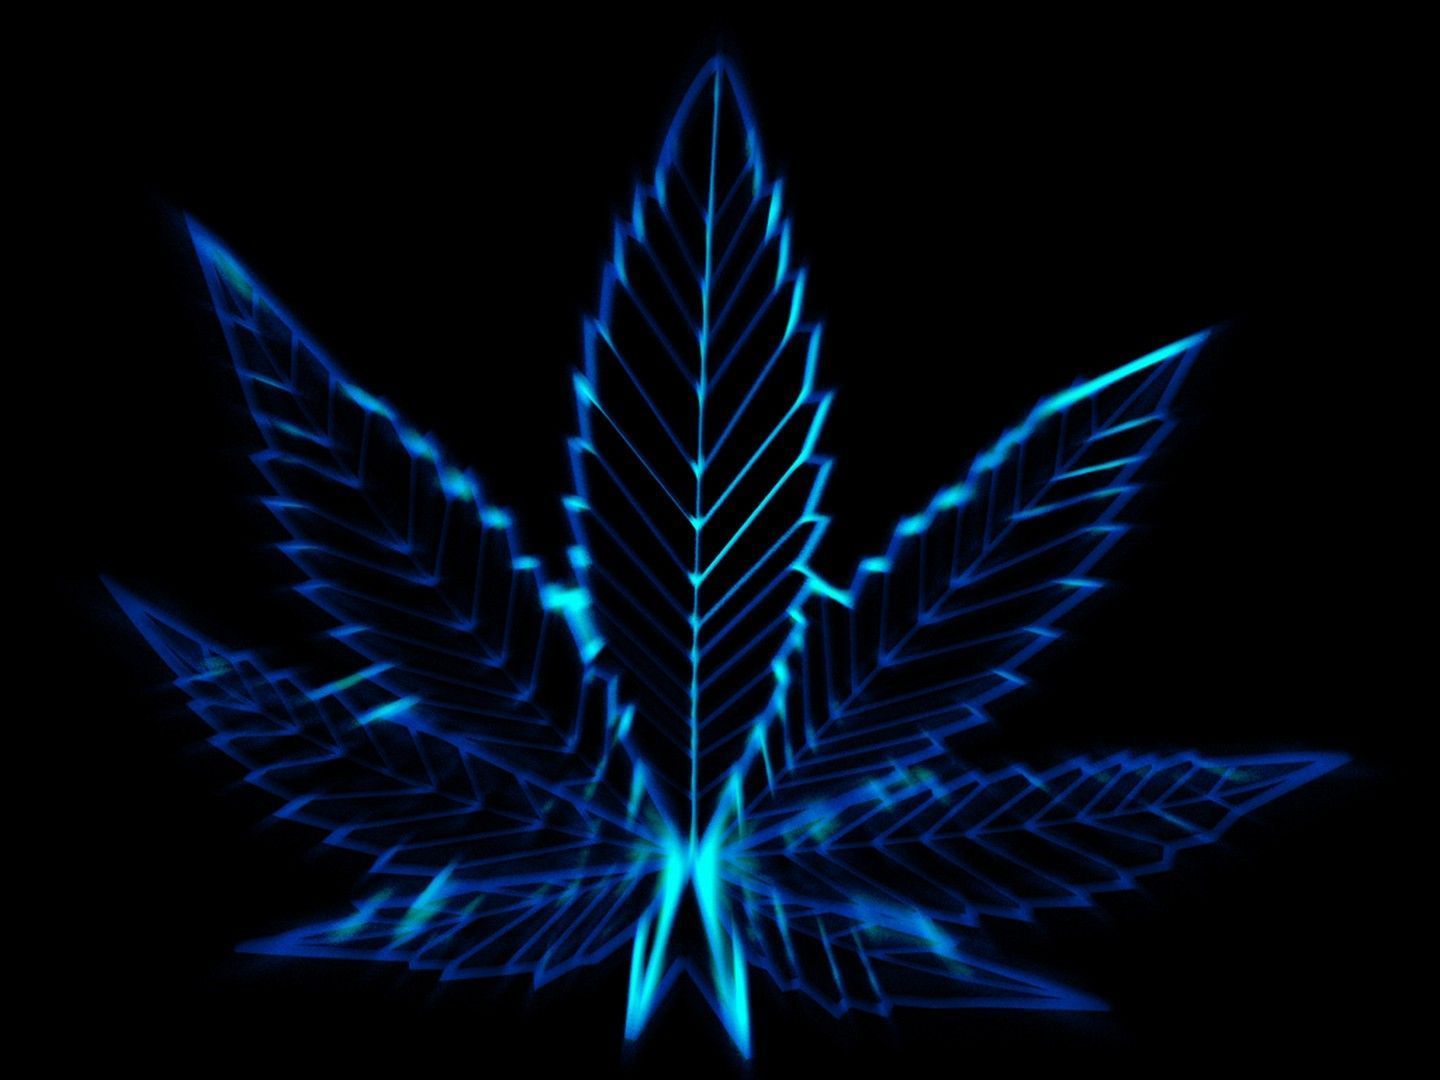 New Marijuana Wallpaper